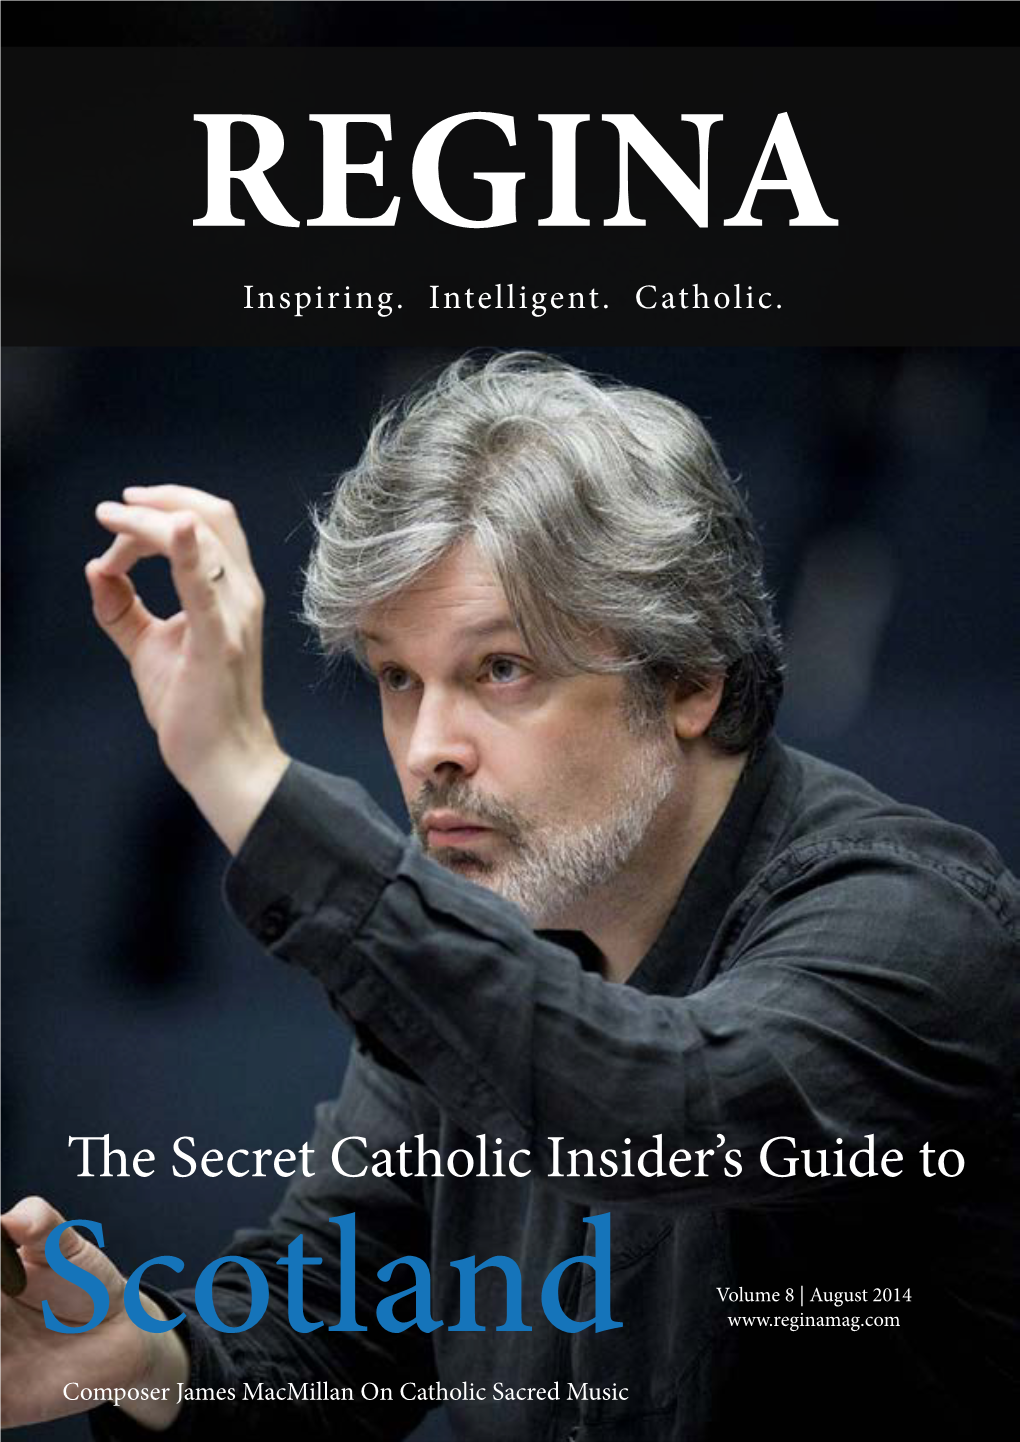 The Secret Catholic Insider's Guide To